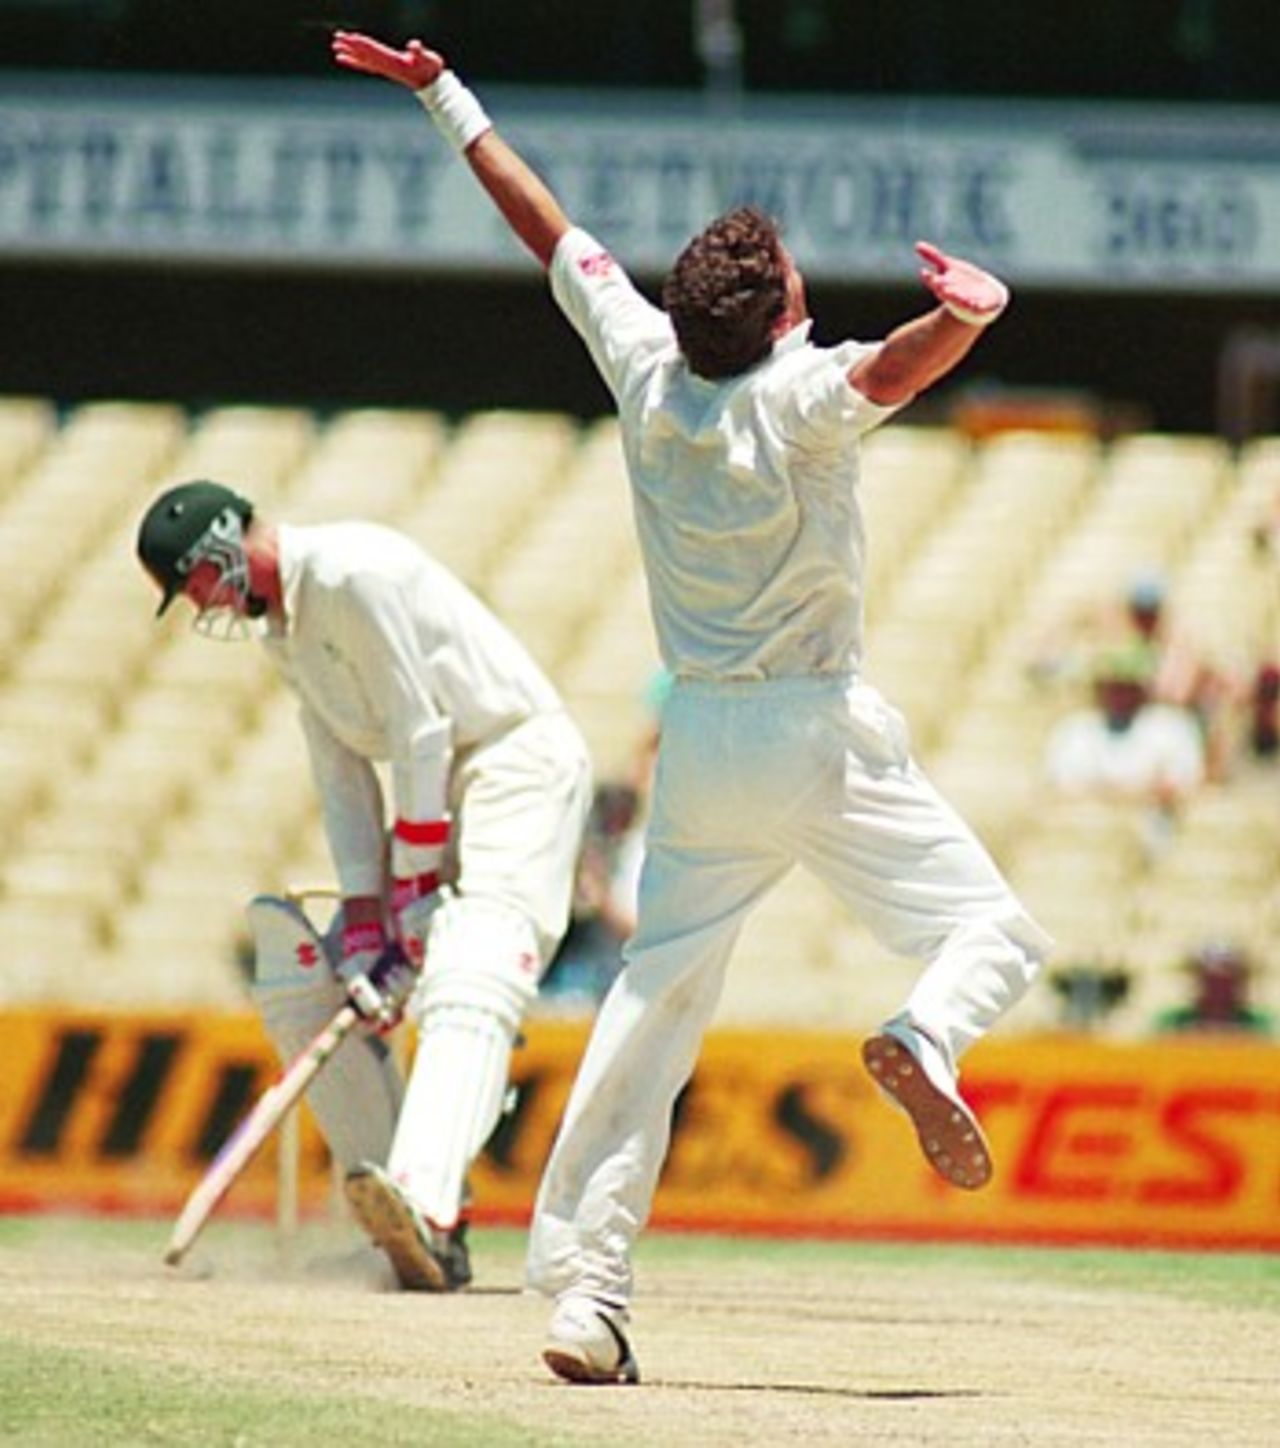 Fanie de Villiers dismisses Glenn McGrath to seal an astonishing win, Australia v South Africa, Sydney 1994